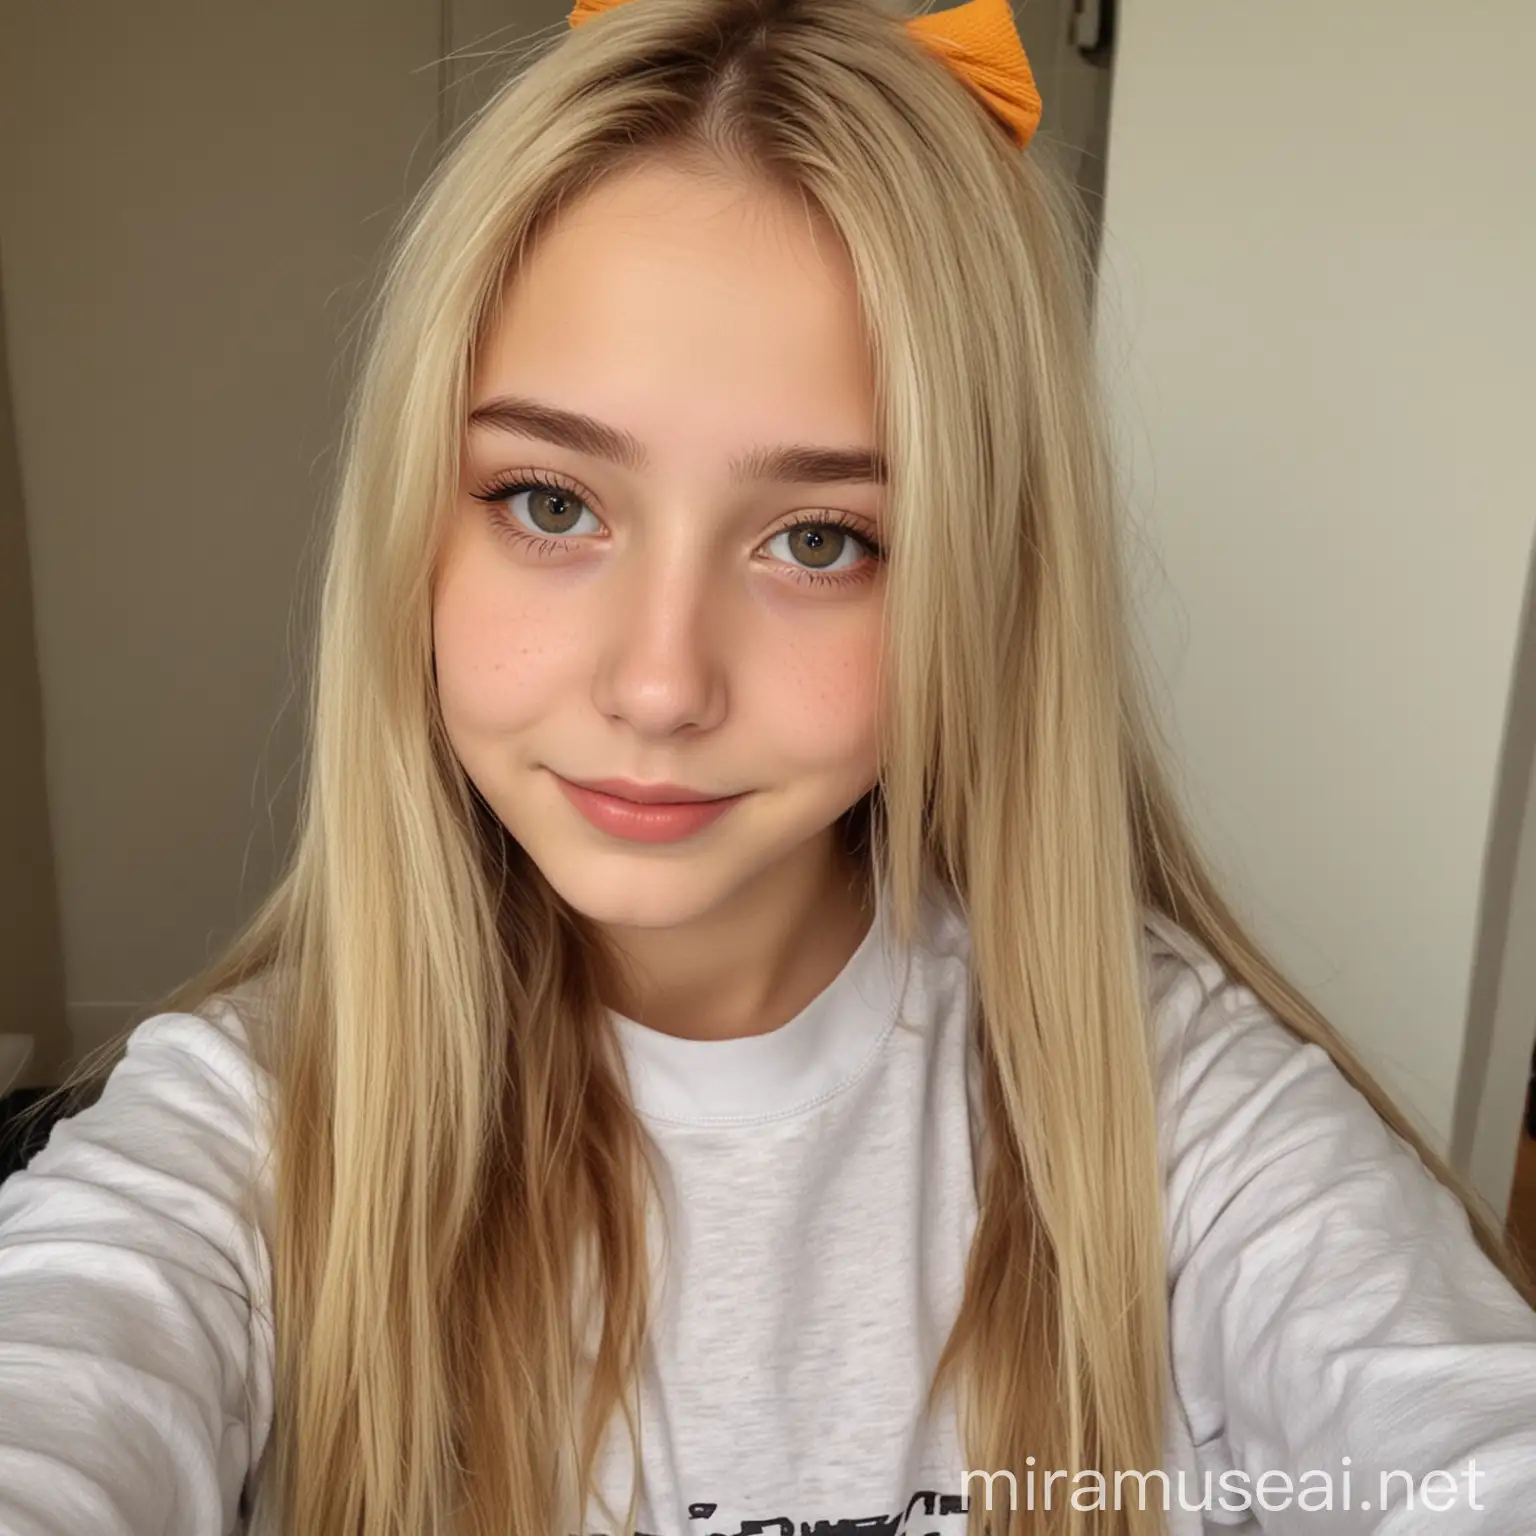 Blonde 13YearOld Girl in Student Attire Taking a Selfie